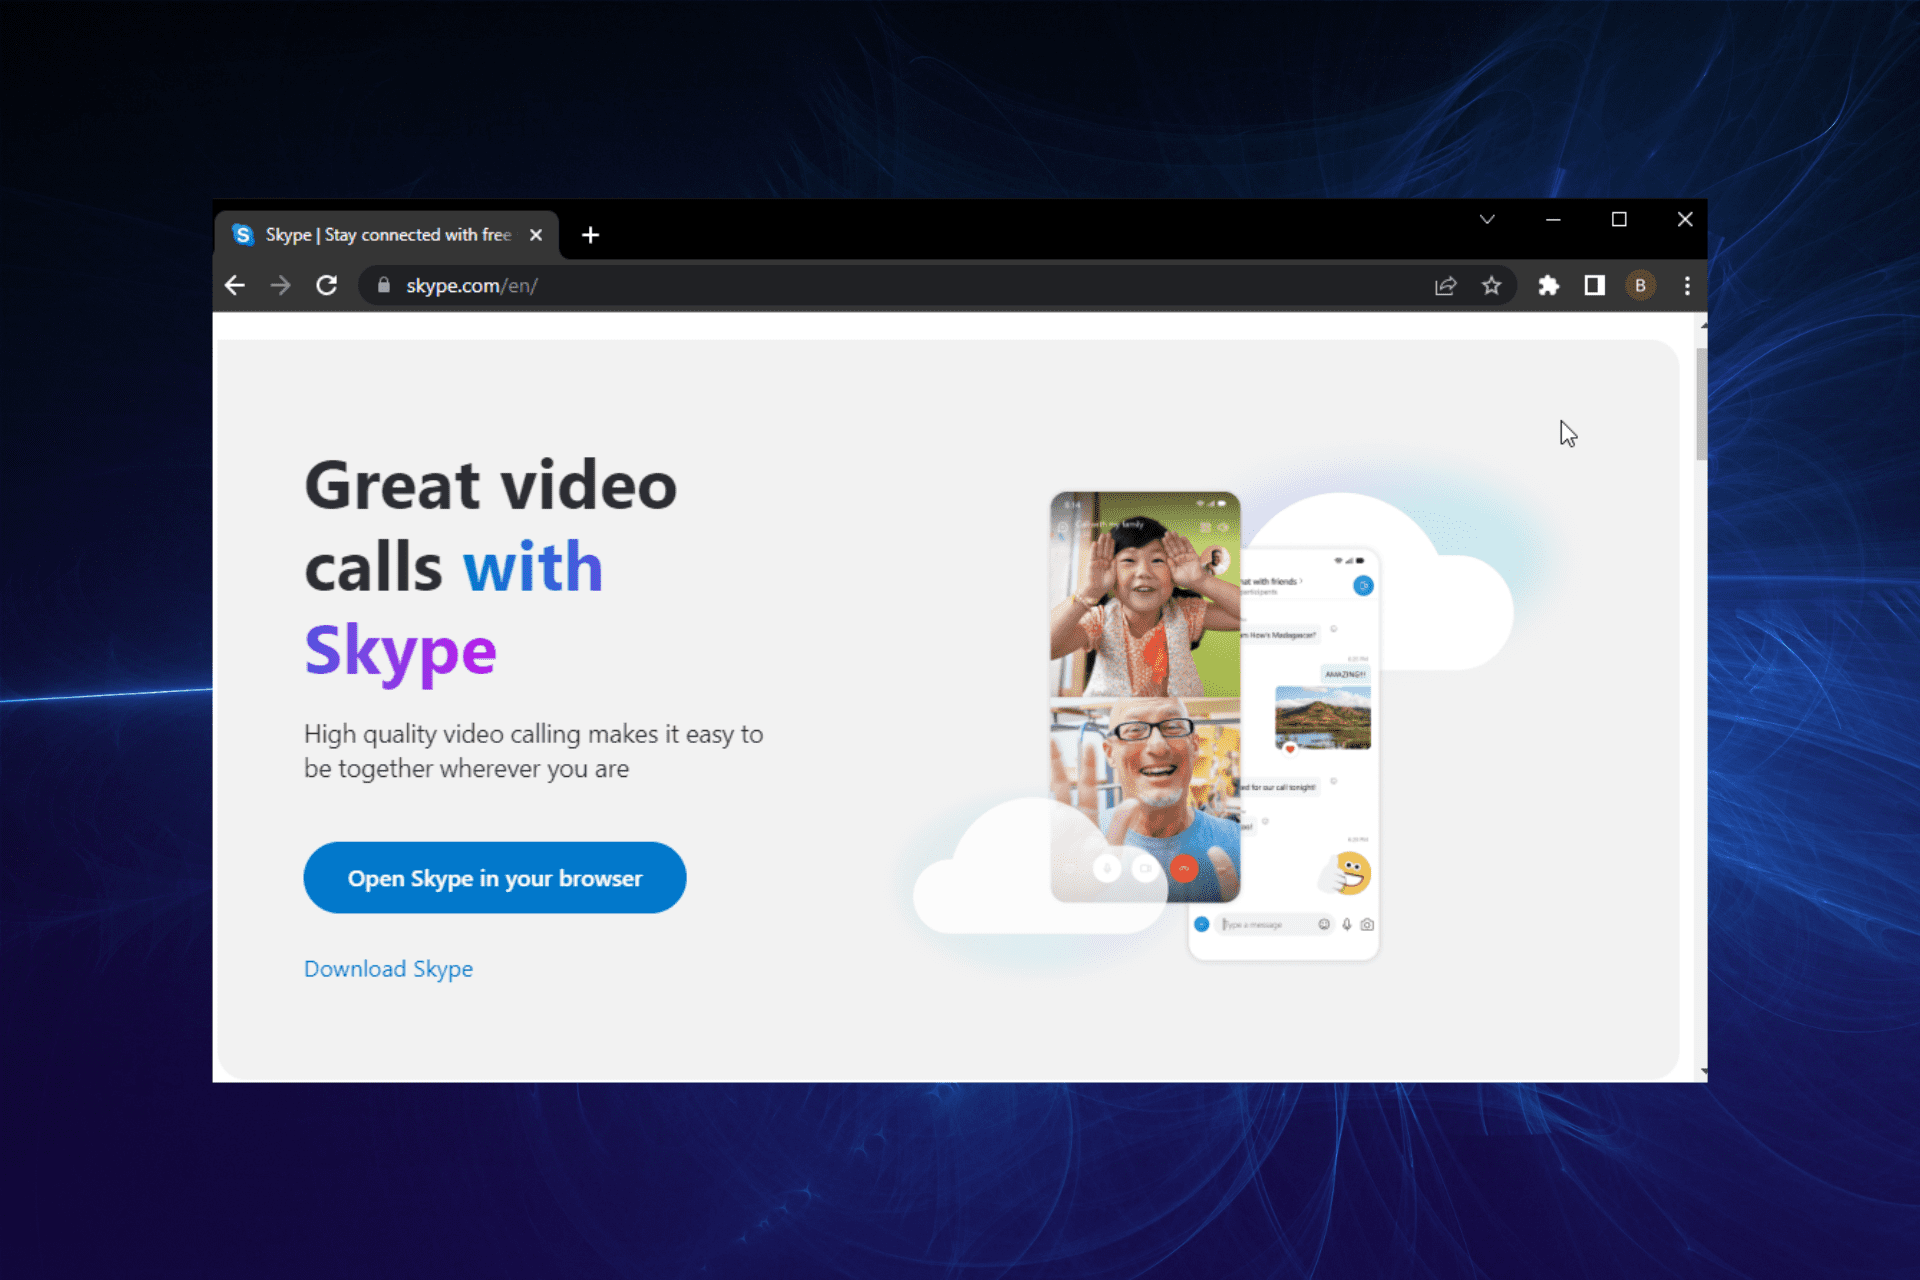 skype verification code not received